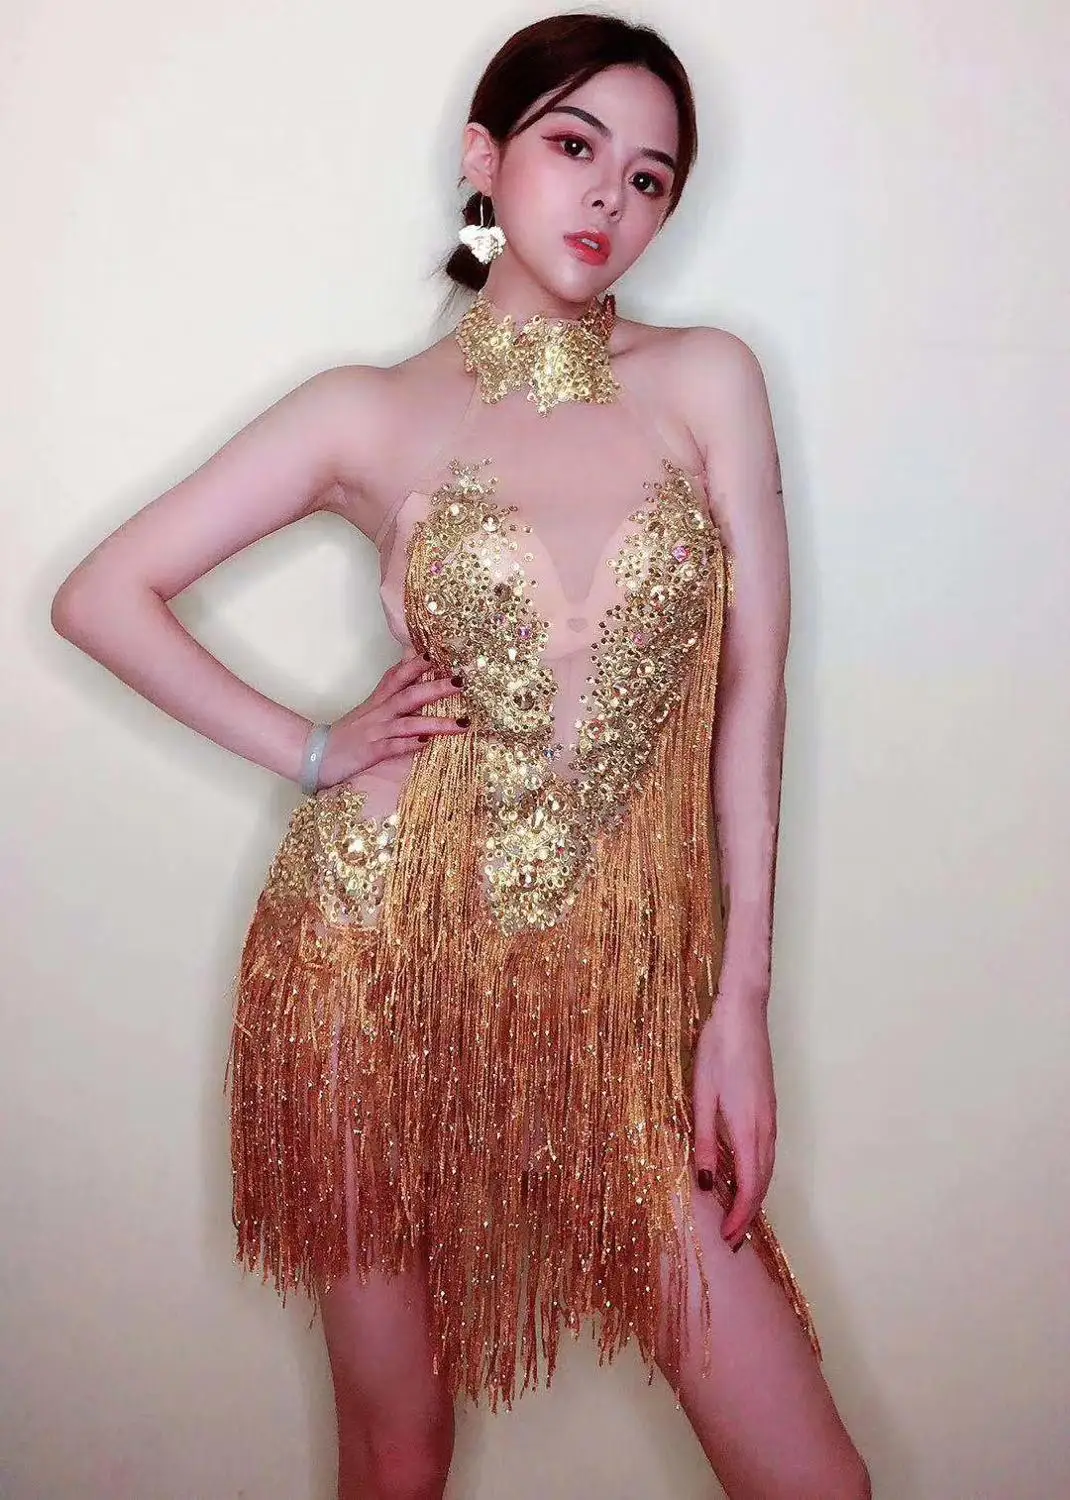 

2020 Women New Flashing Gold Rhinestones Tassel See Through Sexy Dress Birthday Celebrate Mesh Outfit Singer Bar DS Stage Dress